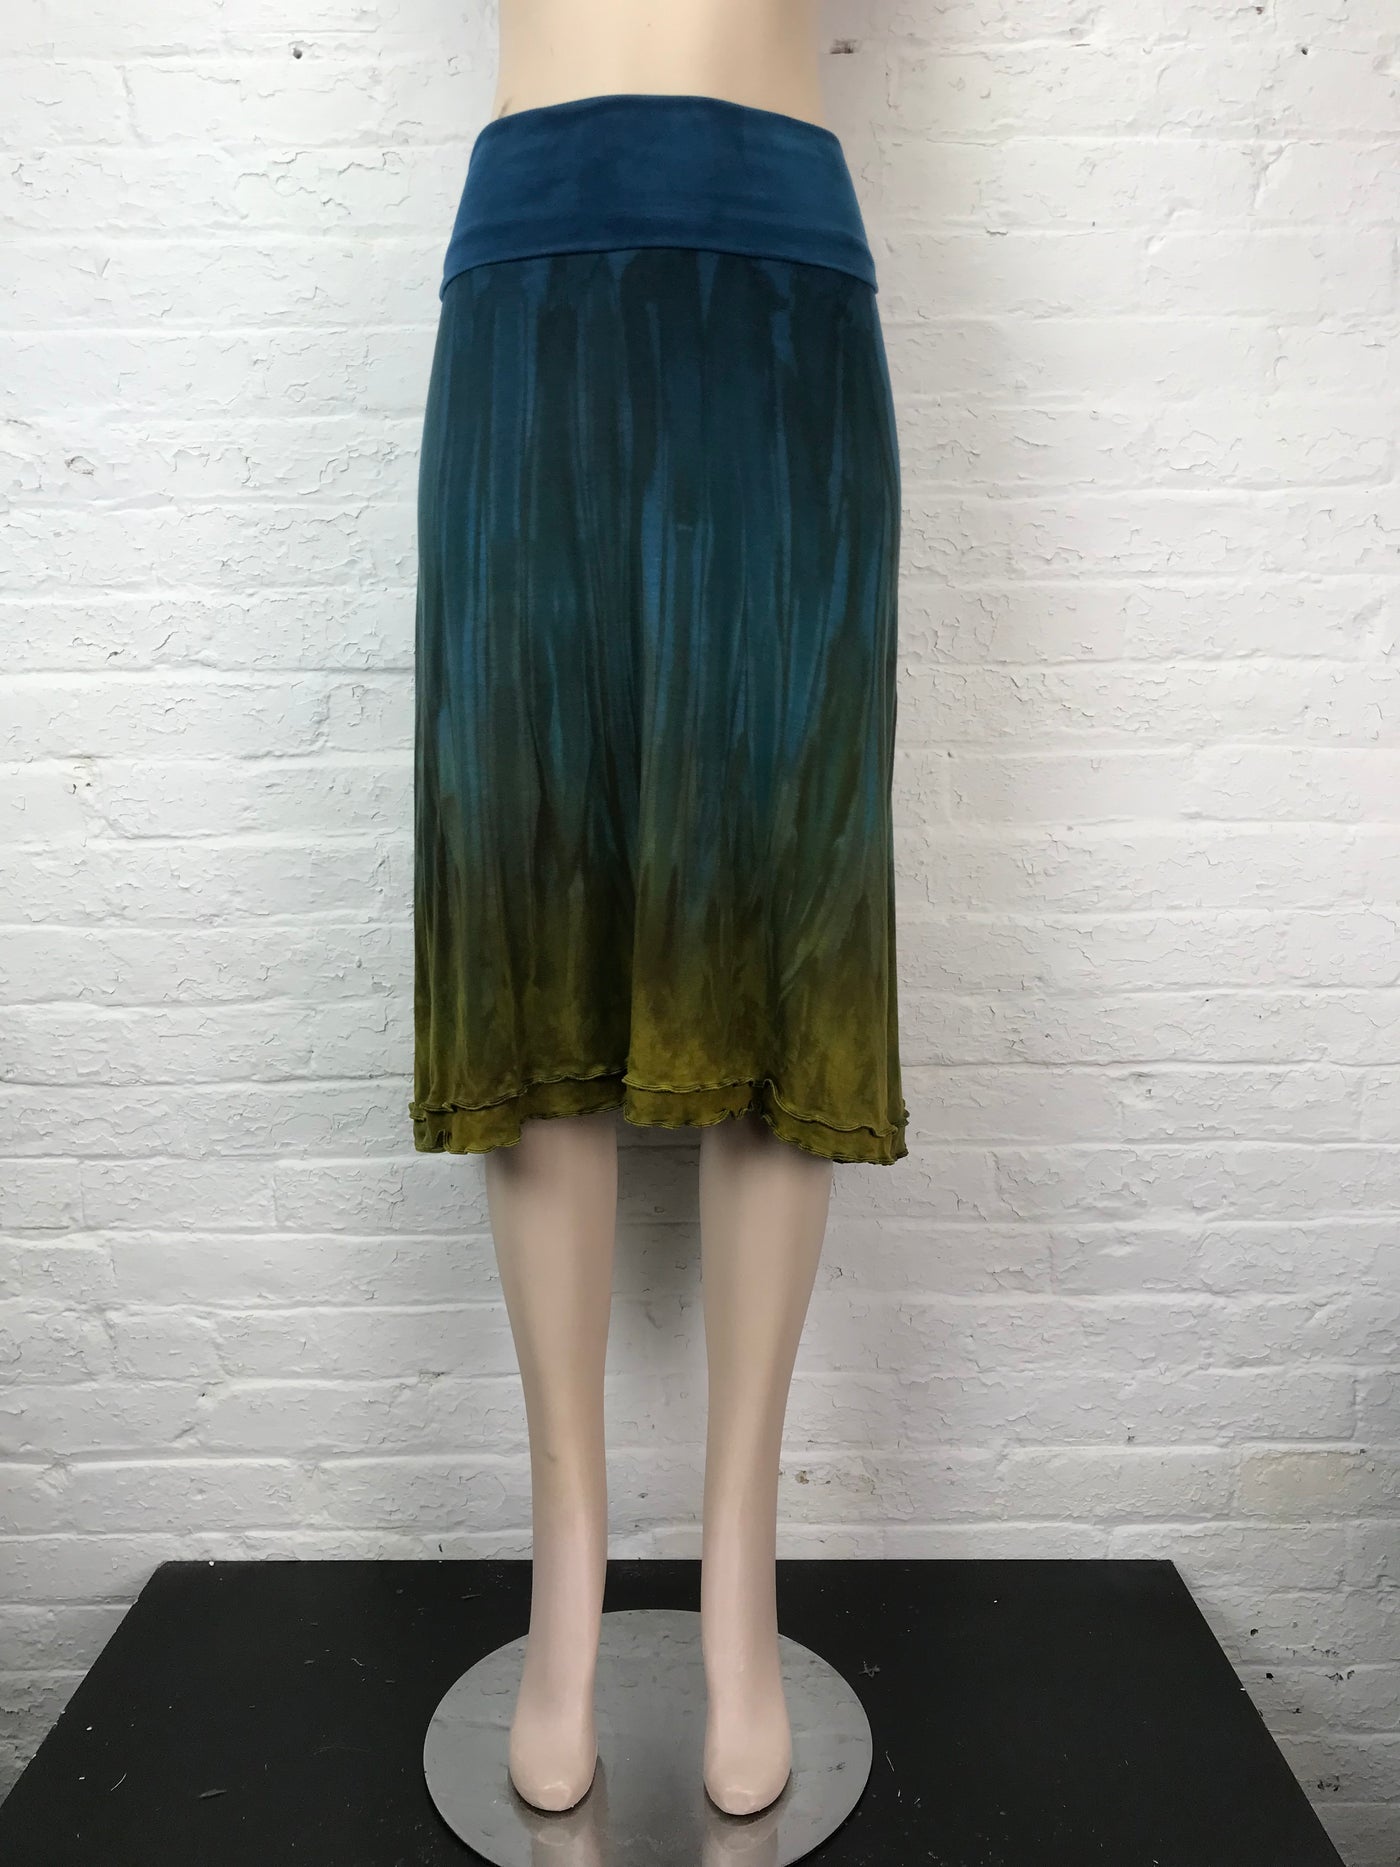 Double Ruffle Midi Skirt in Golden Grove Ombre